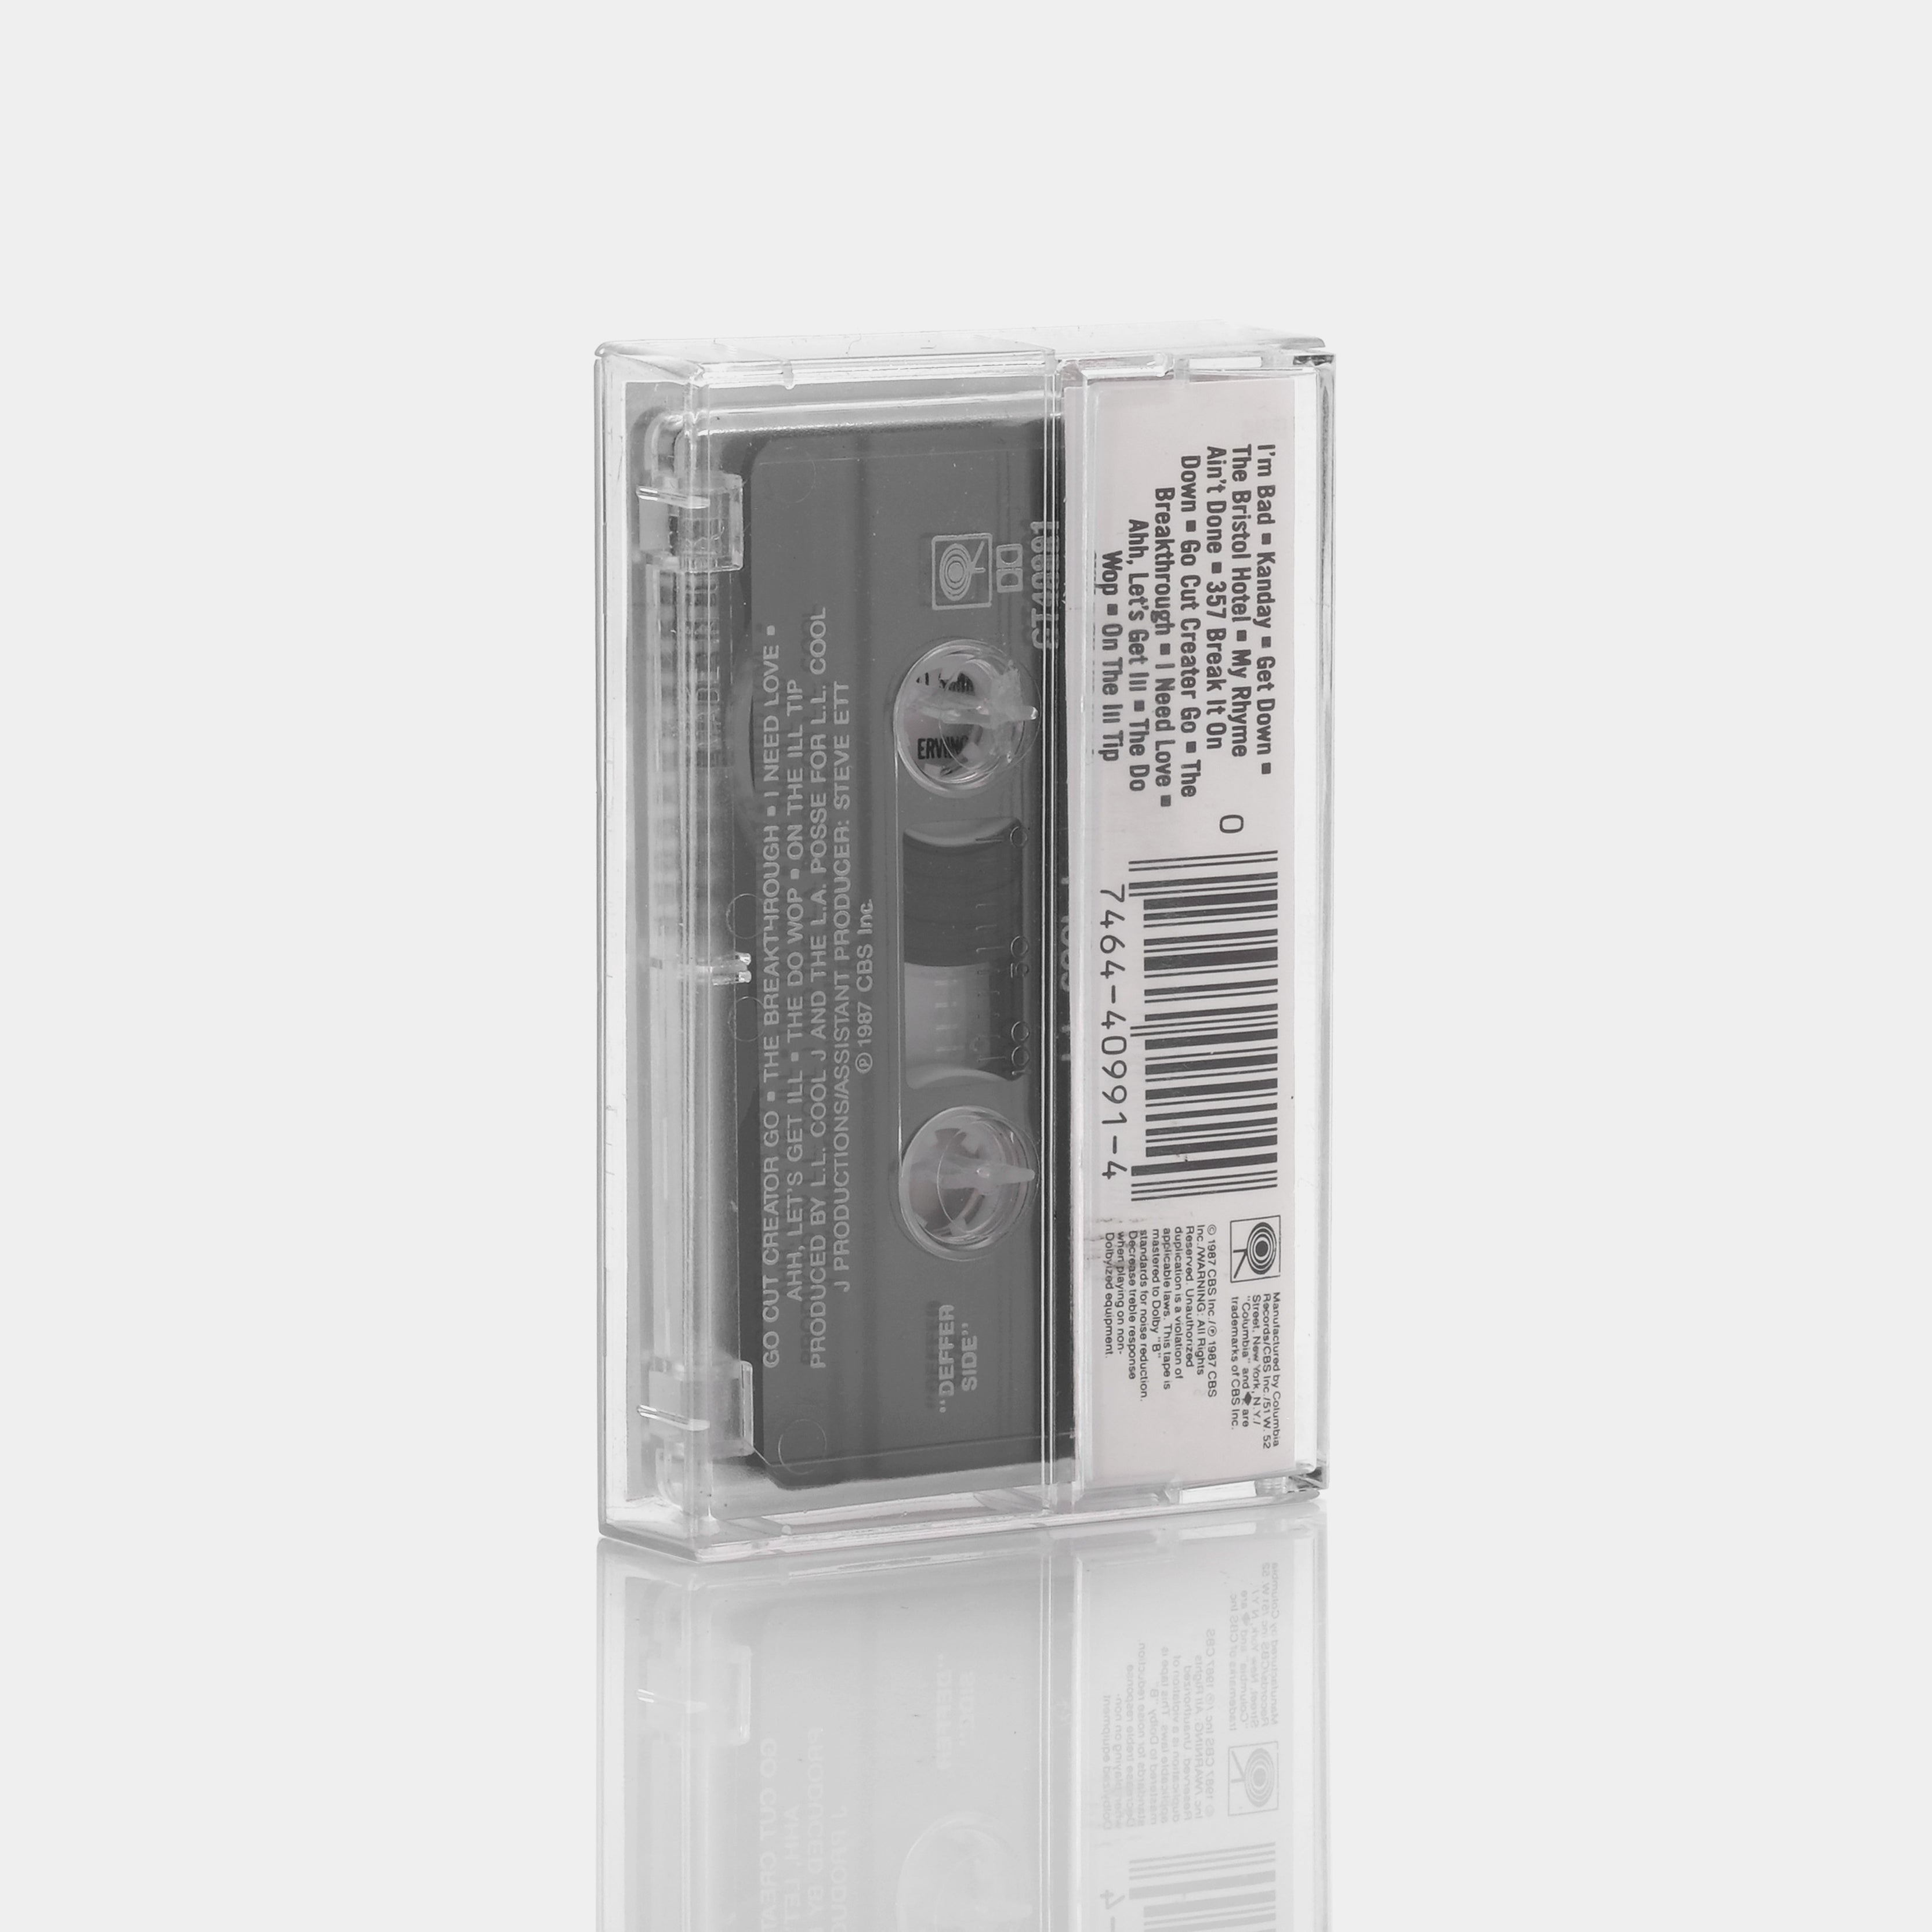 LL Cool J - Bigger And Deffer Cassette Tape